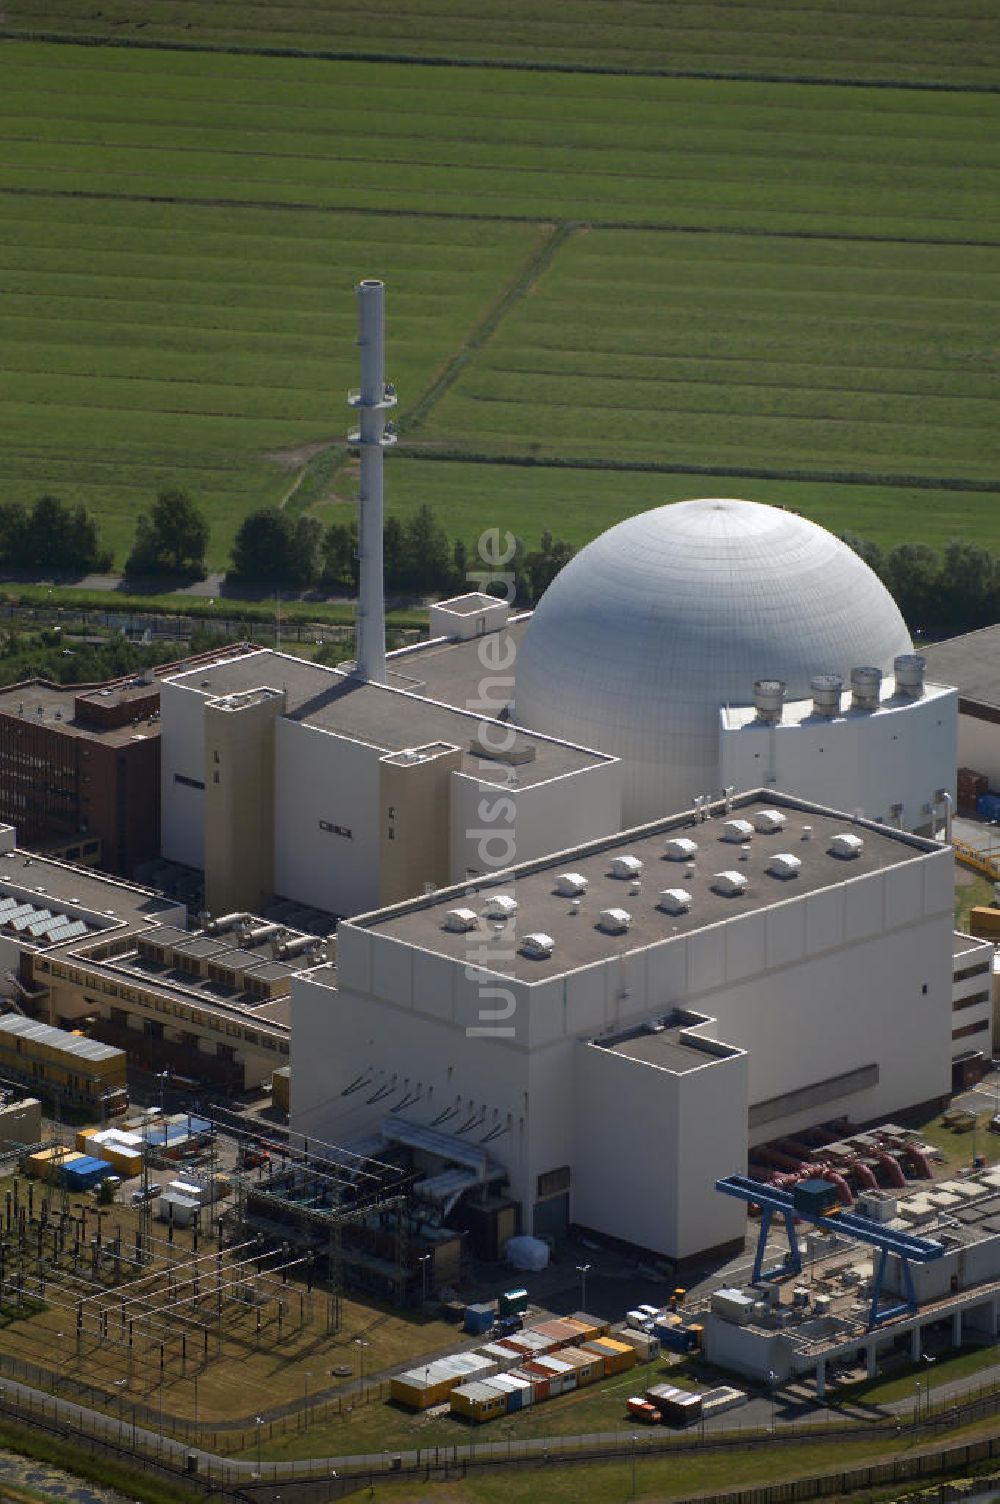 Luftaufnahme Brokdorf - Kernkraftwerk / Atomkraftwerk Brokdorf KBR